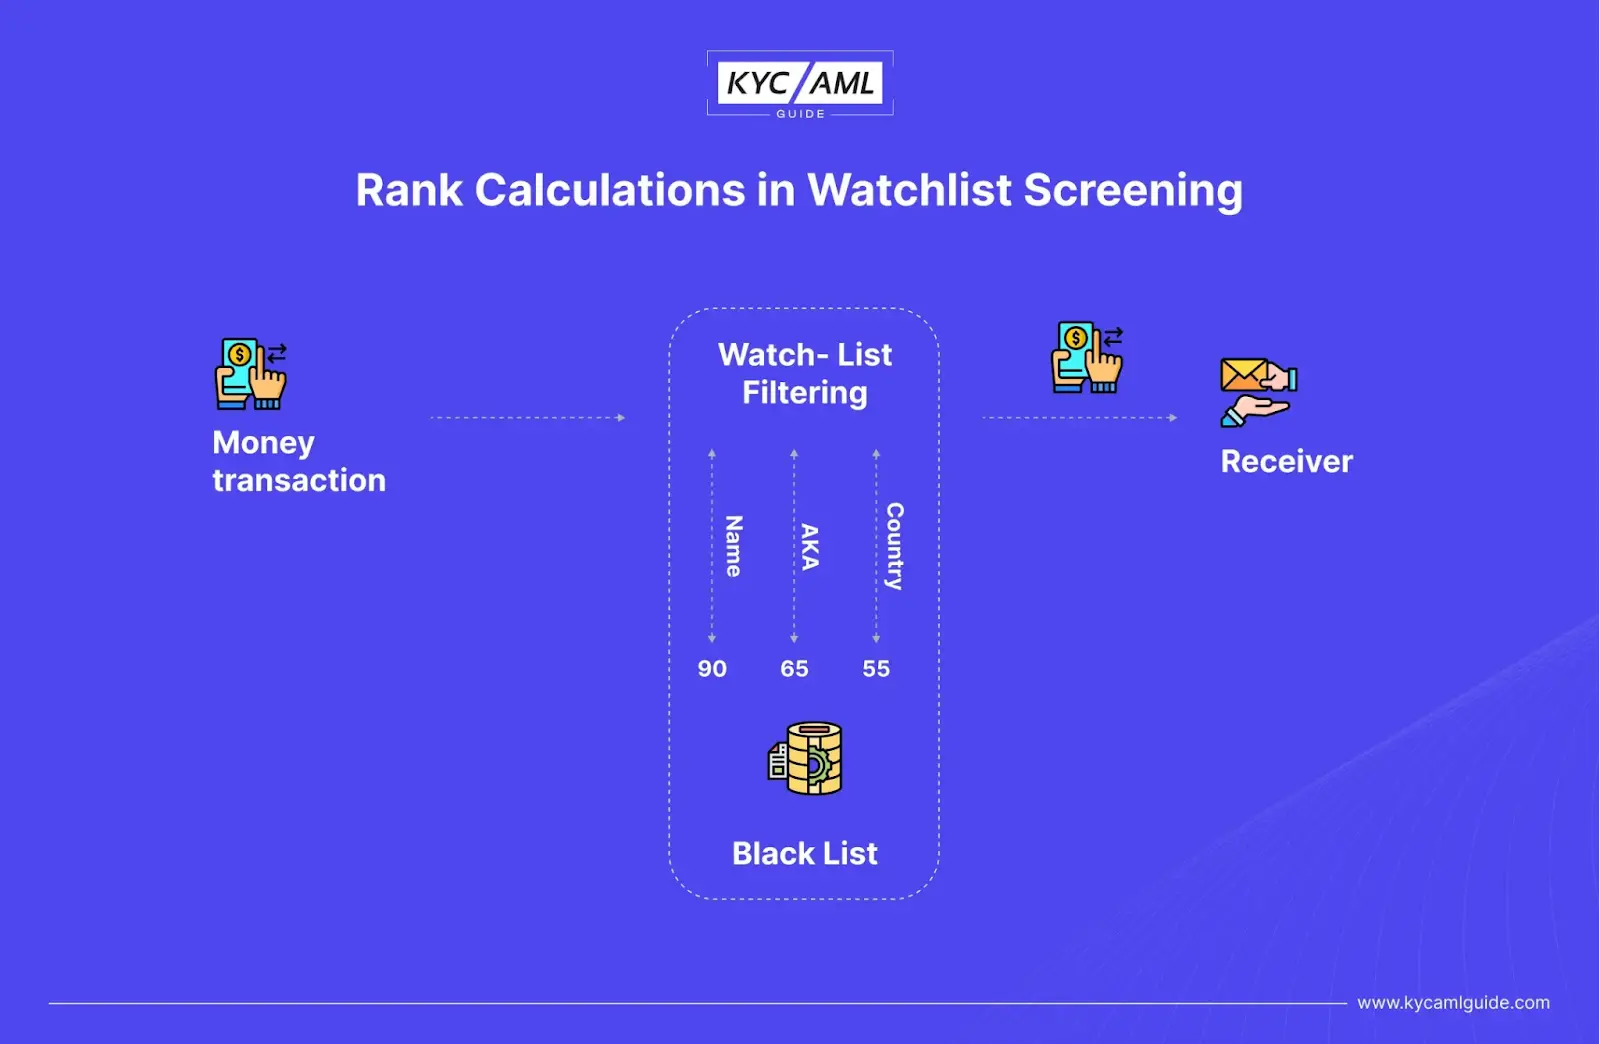 Rank Calculations facilitate AML Watchlist Screening